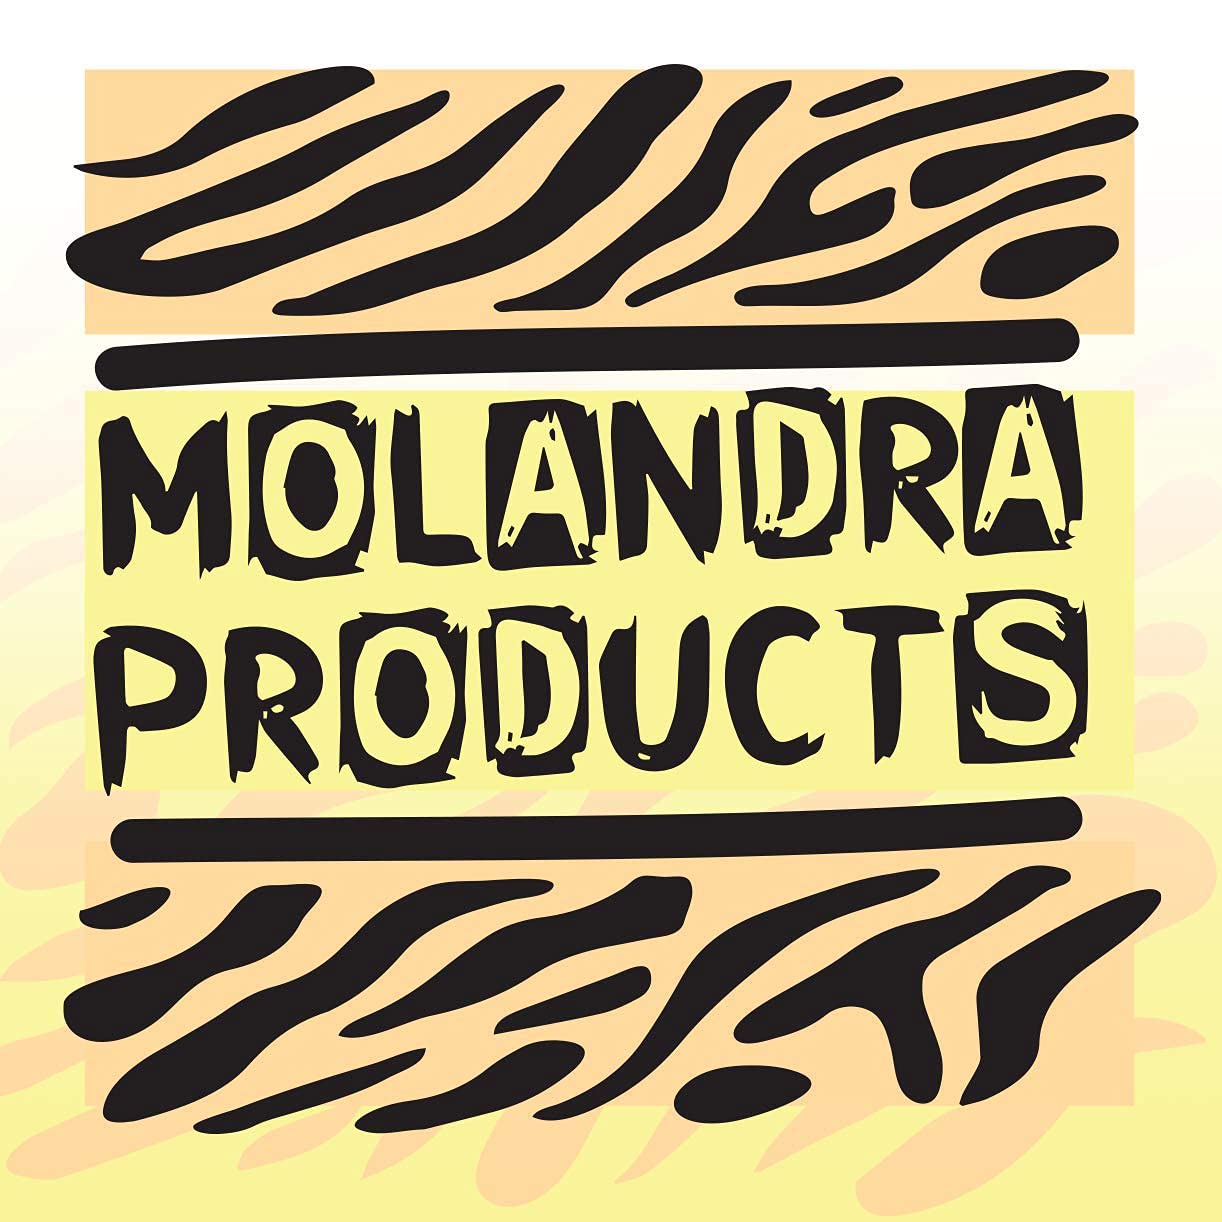 Molandra Products I Miss Getting A Henna Tattoo - Ceramic 11oz White Mug, White